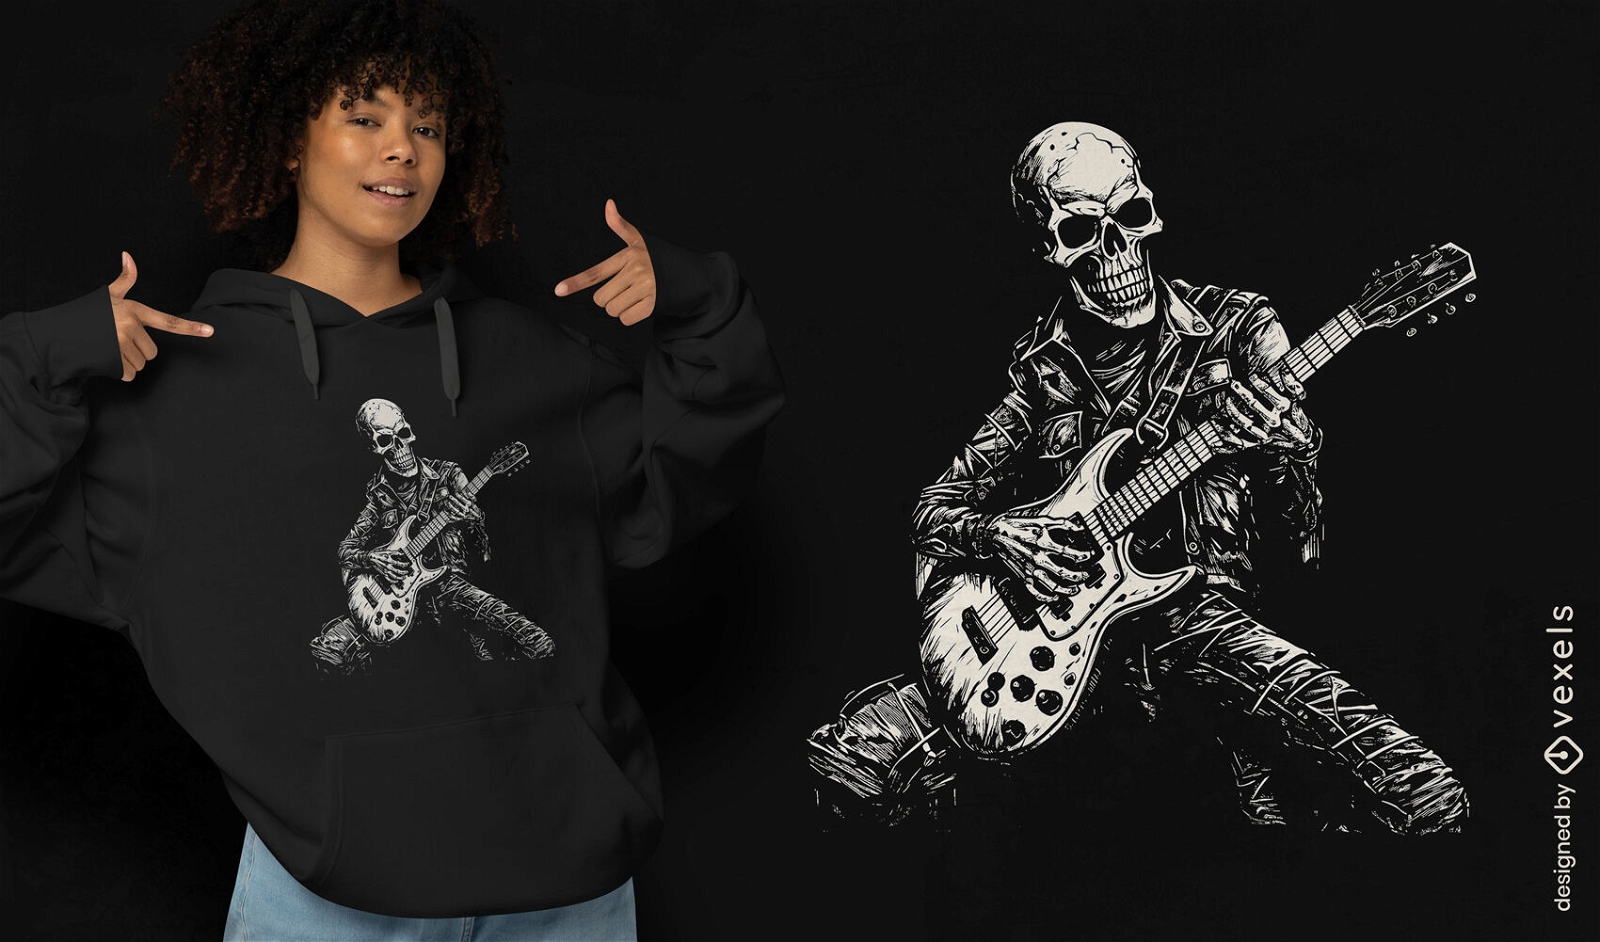 Dise?o de camiseta de jugador de rock and roll esqueleto